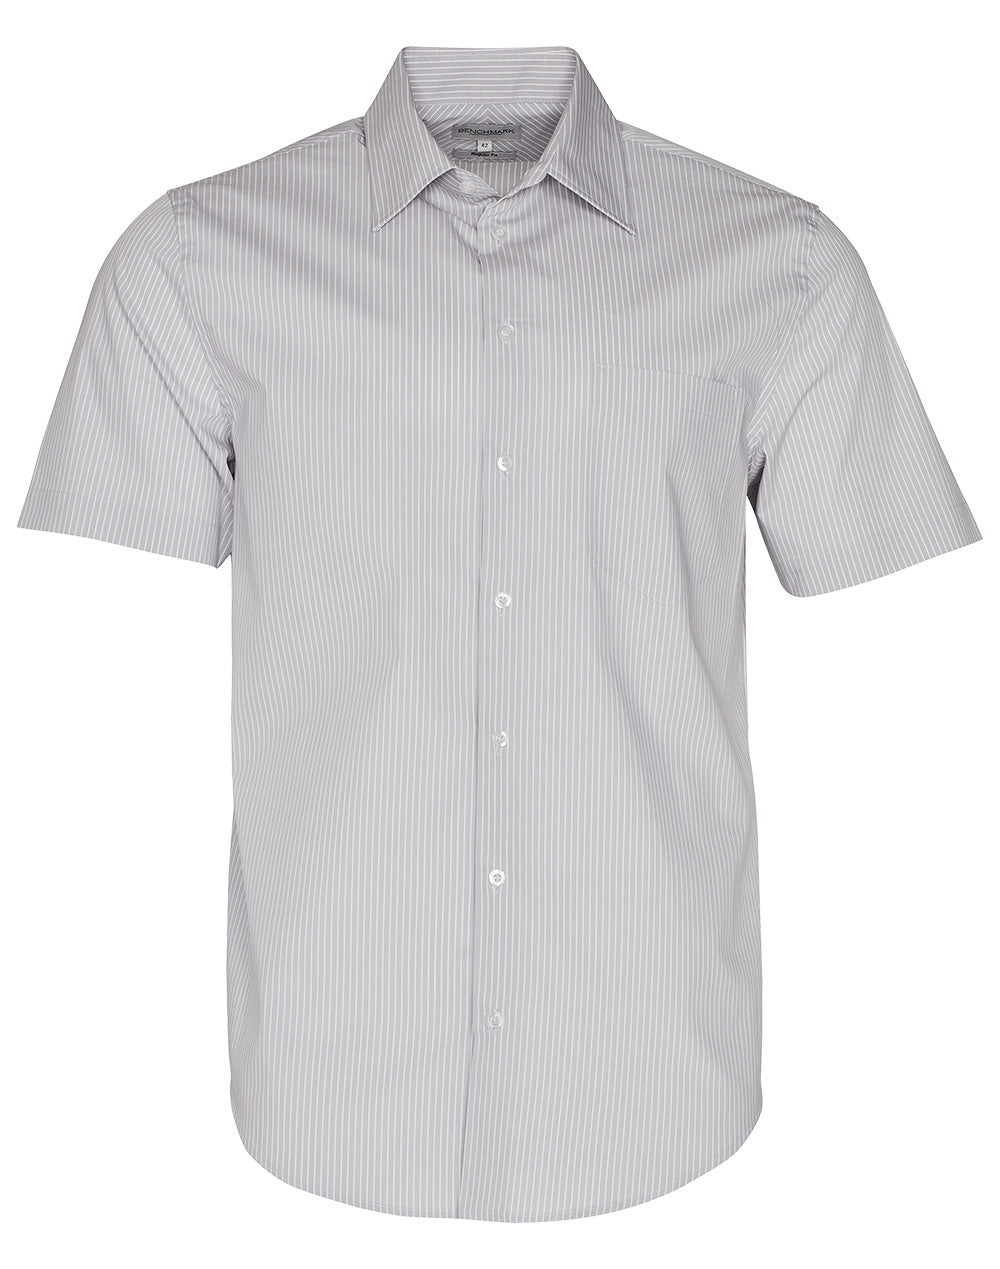 [M7200S] Men's Ticking Stripe S/S Shirt